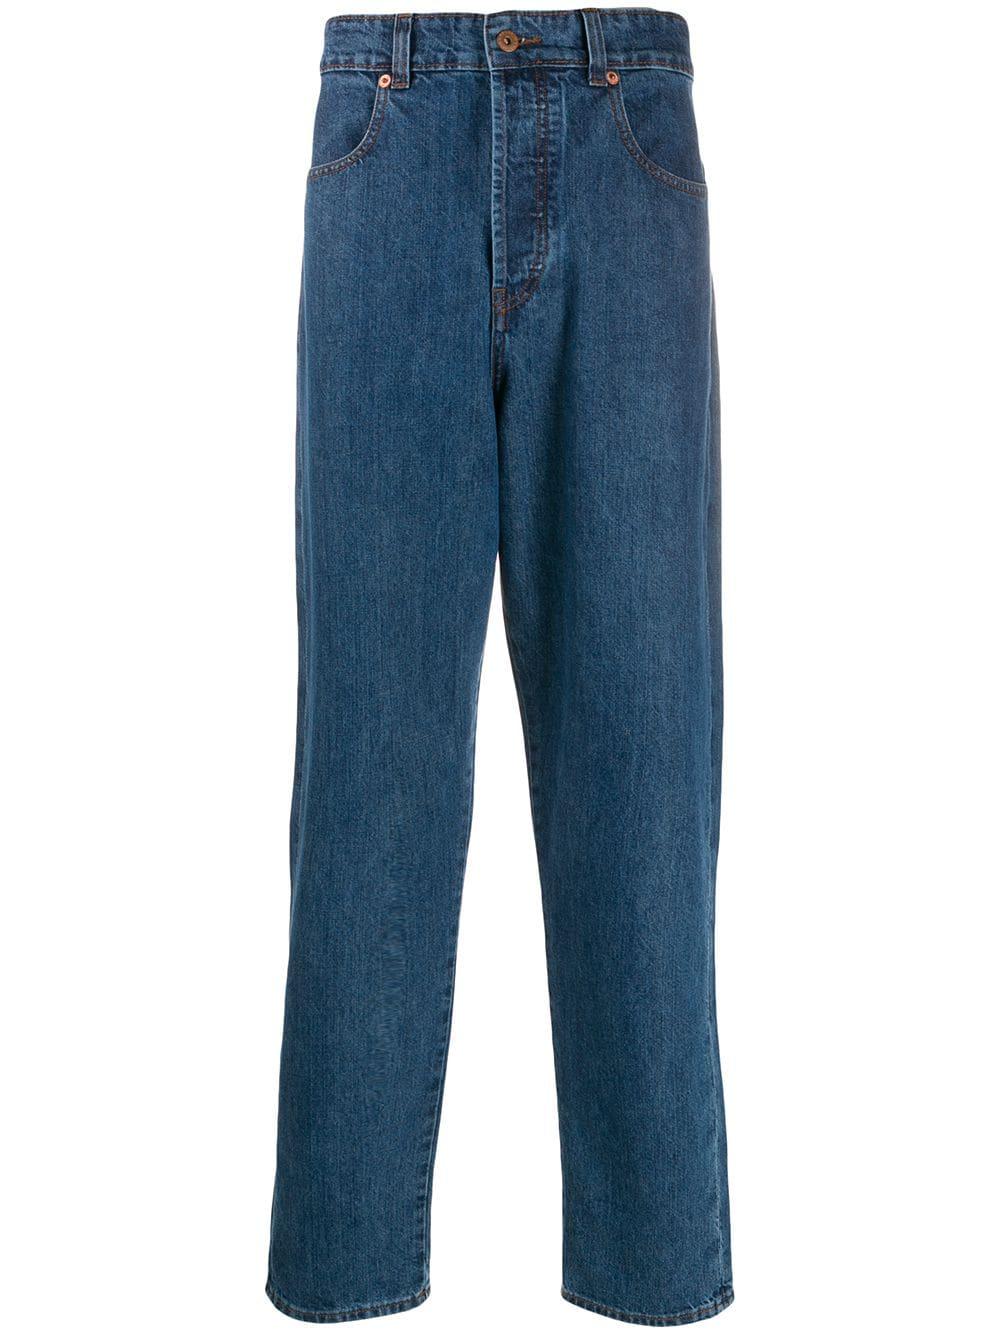 Natural Selection Denim Boxer Jeans in Blue for Men - Lyst